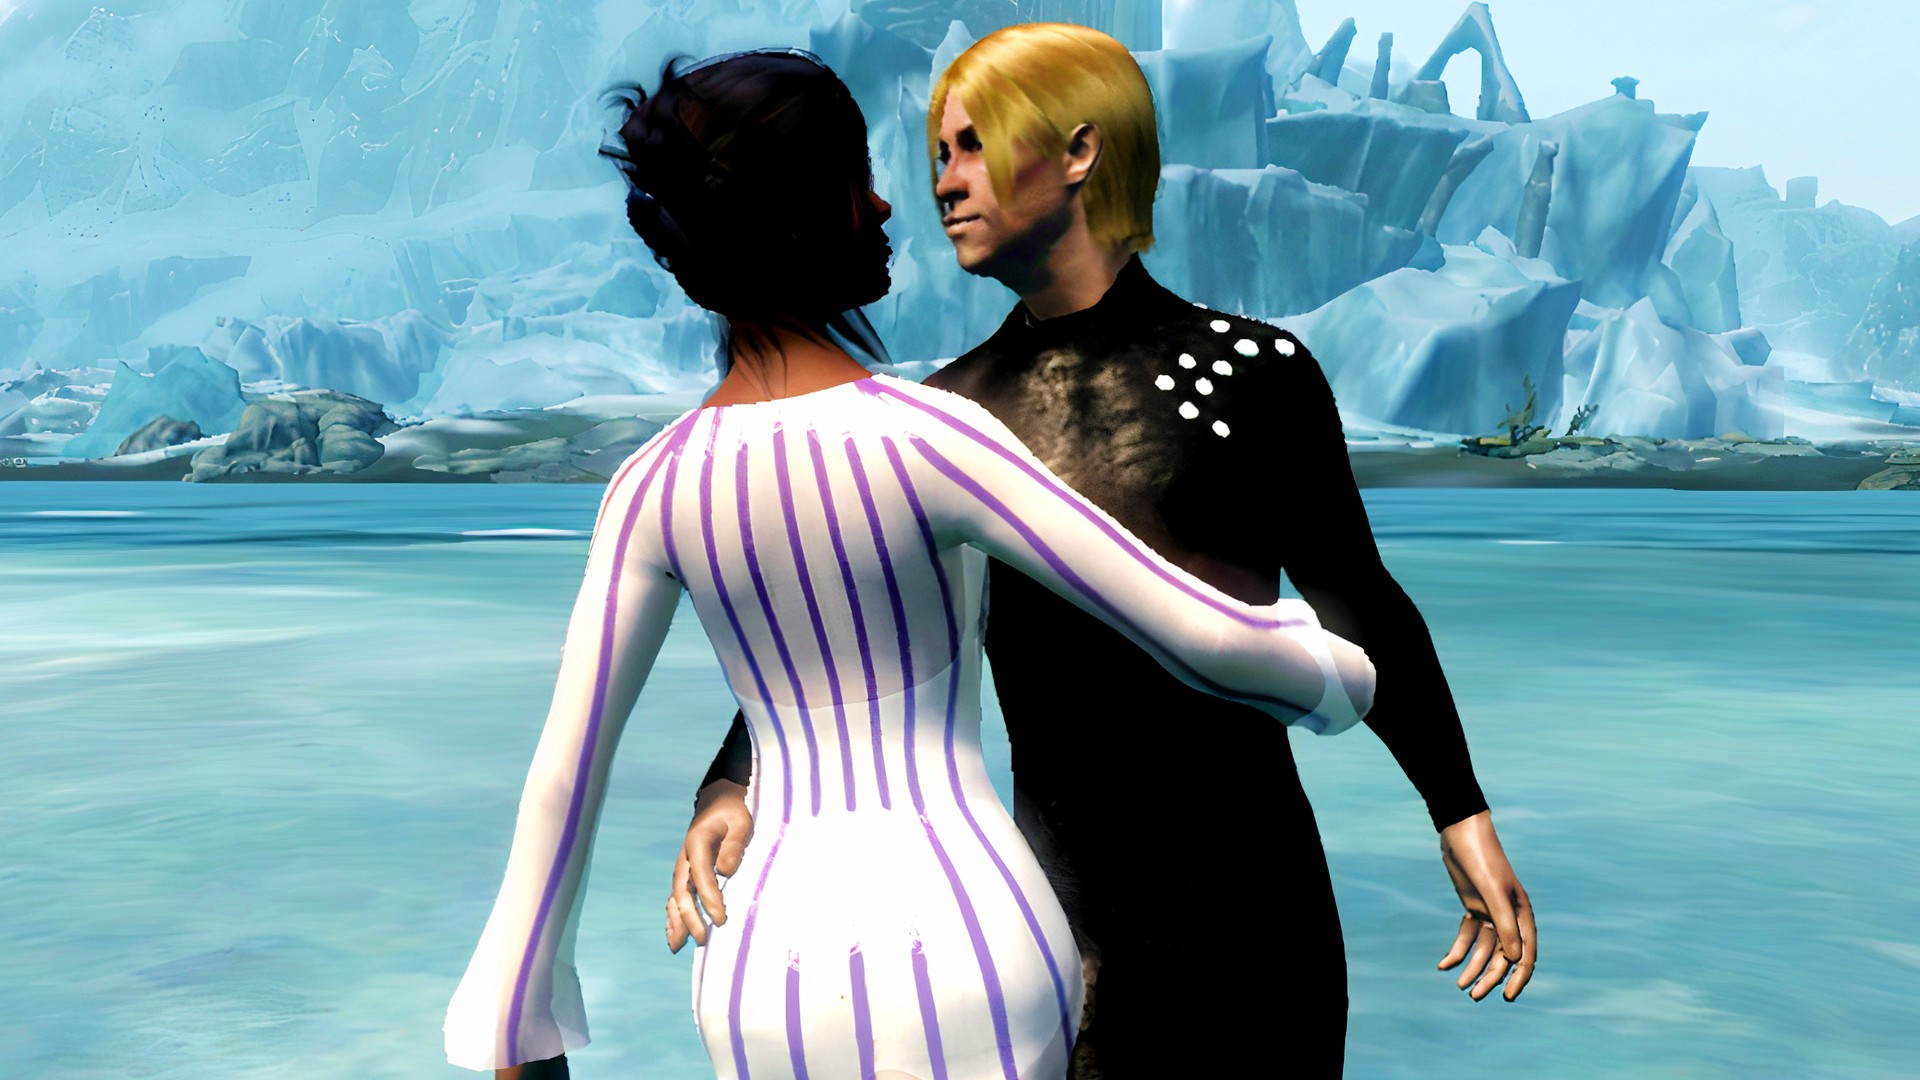 Skyrim mod lets you take Lydia ice skating in Bethesda RPG